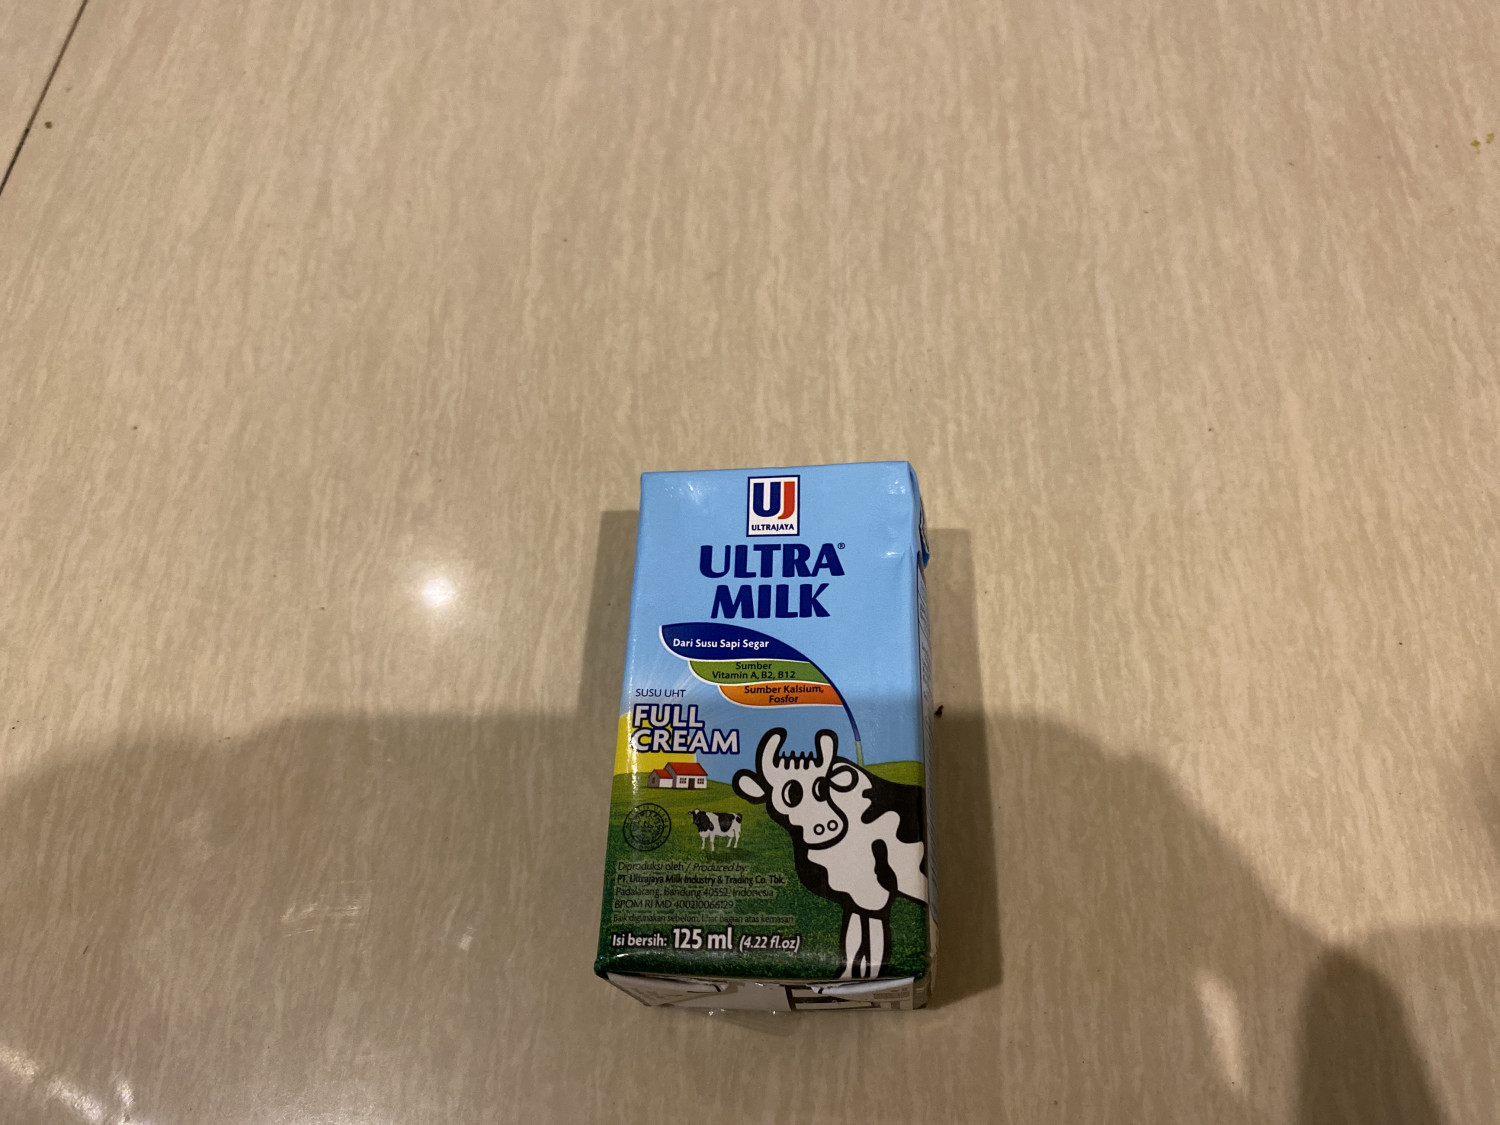 Susu Ultra Milk Full Cream 125ml